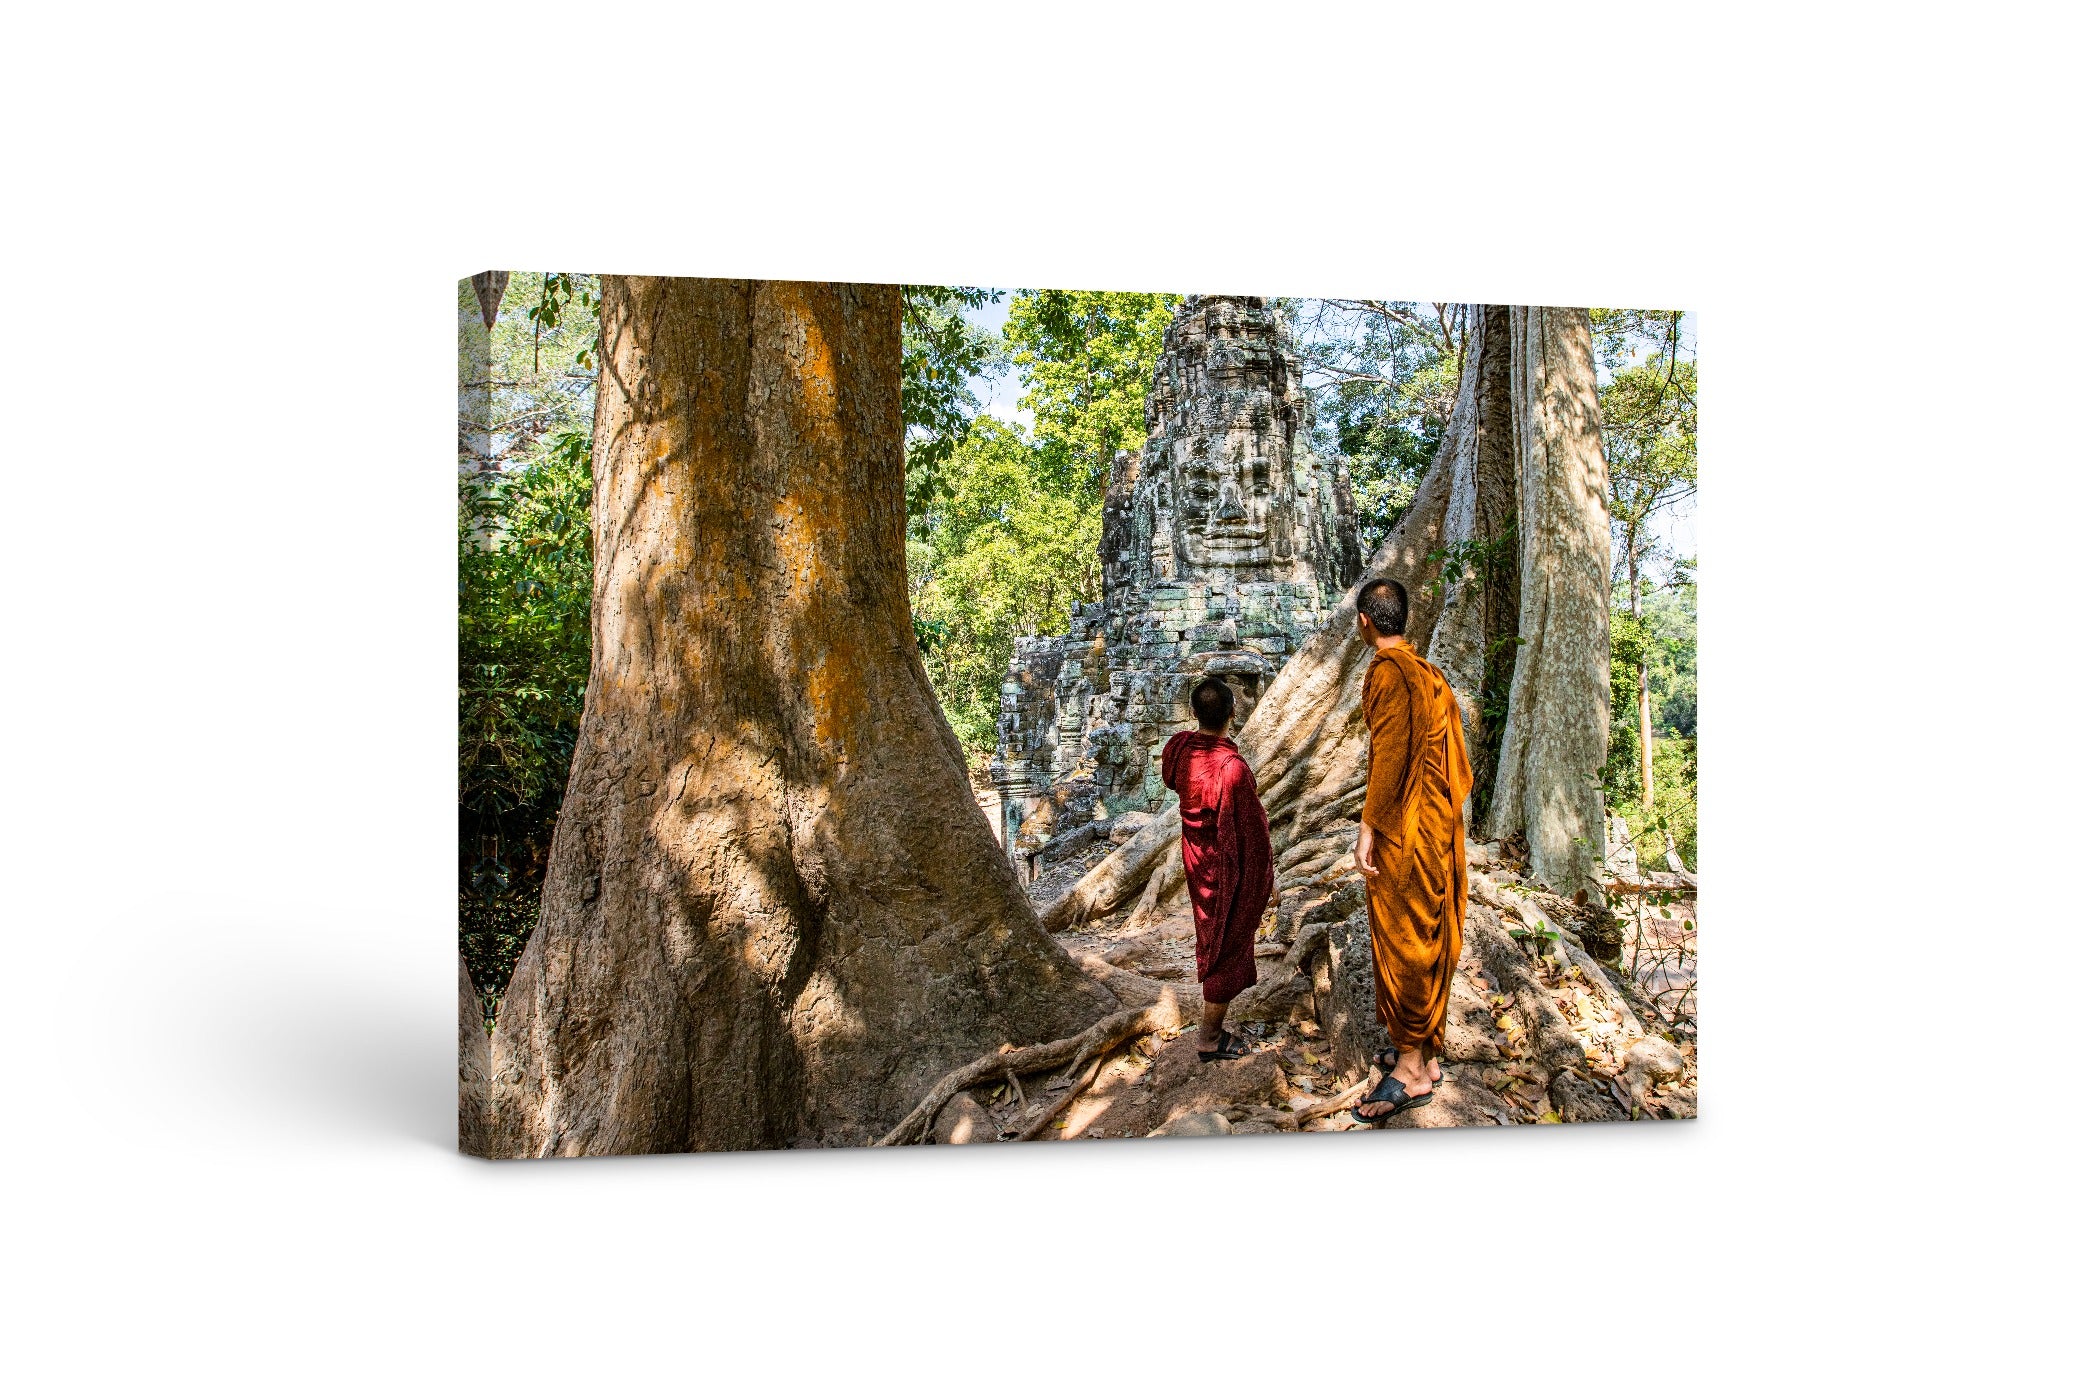 Angkor Thom 24x36"